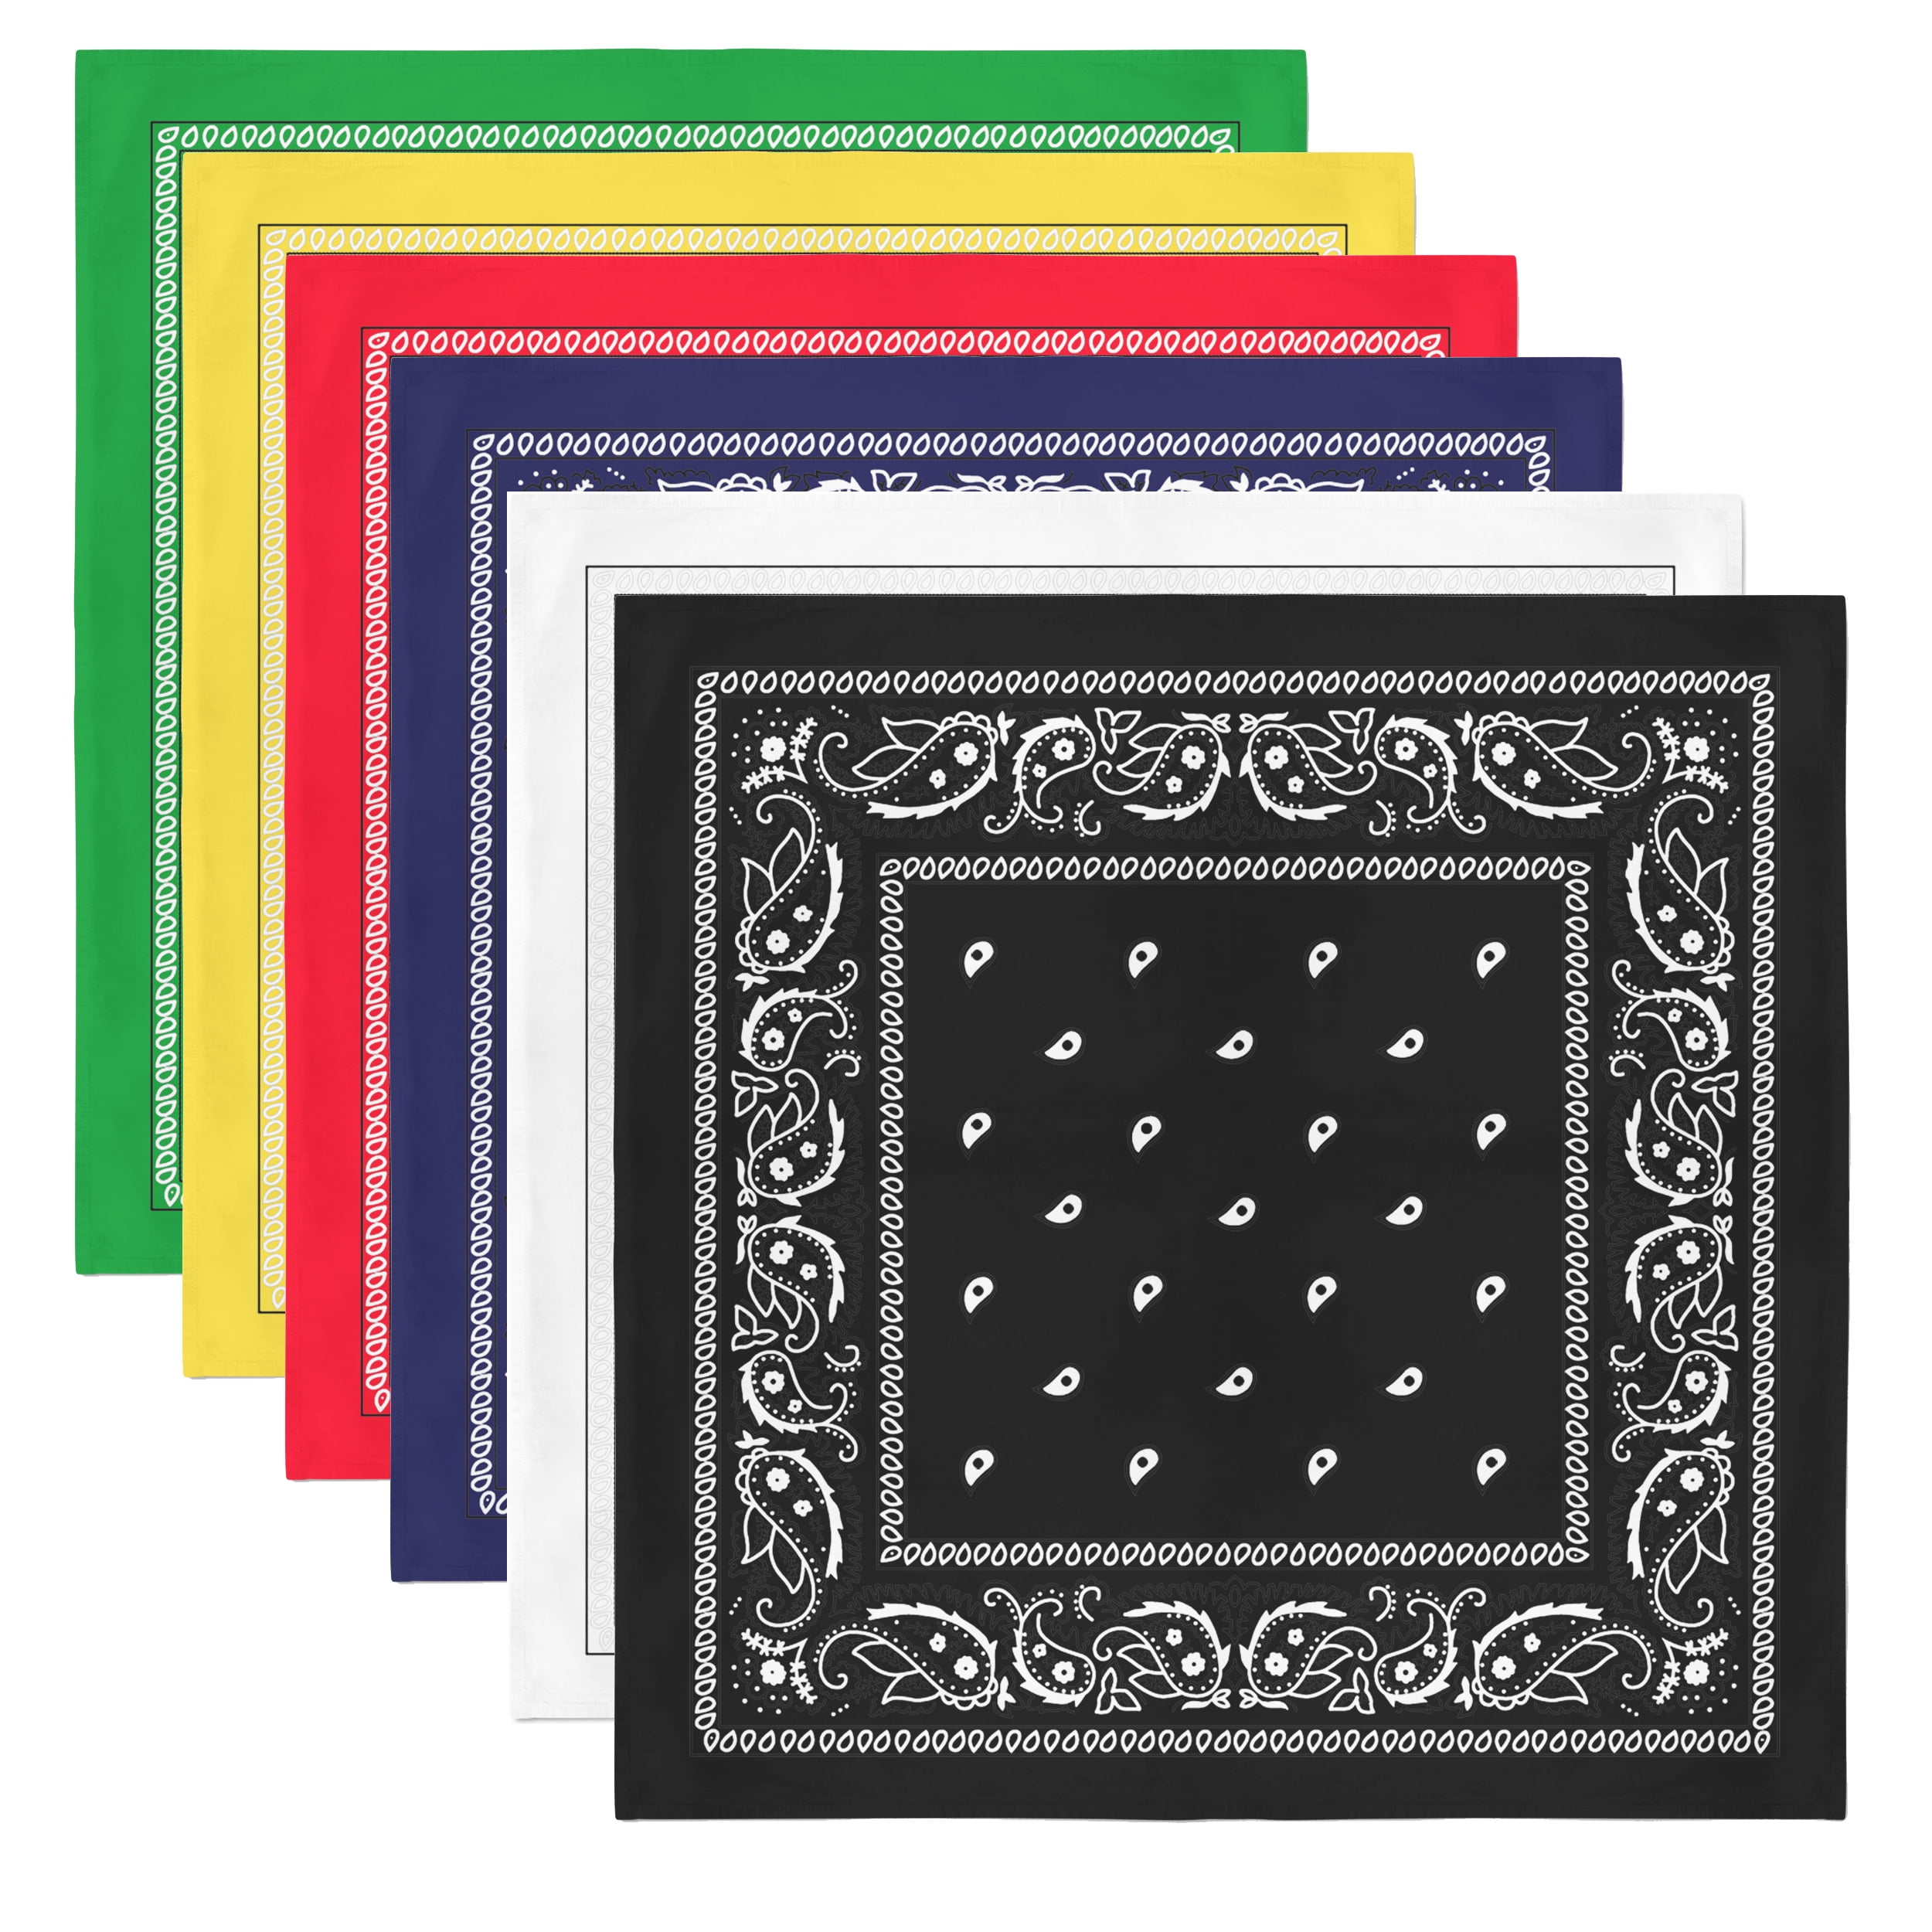 4 Pack X-Large Paisley Cotton Printed Bandana - 27 x 27 inches (Black) -